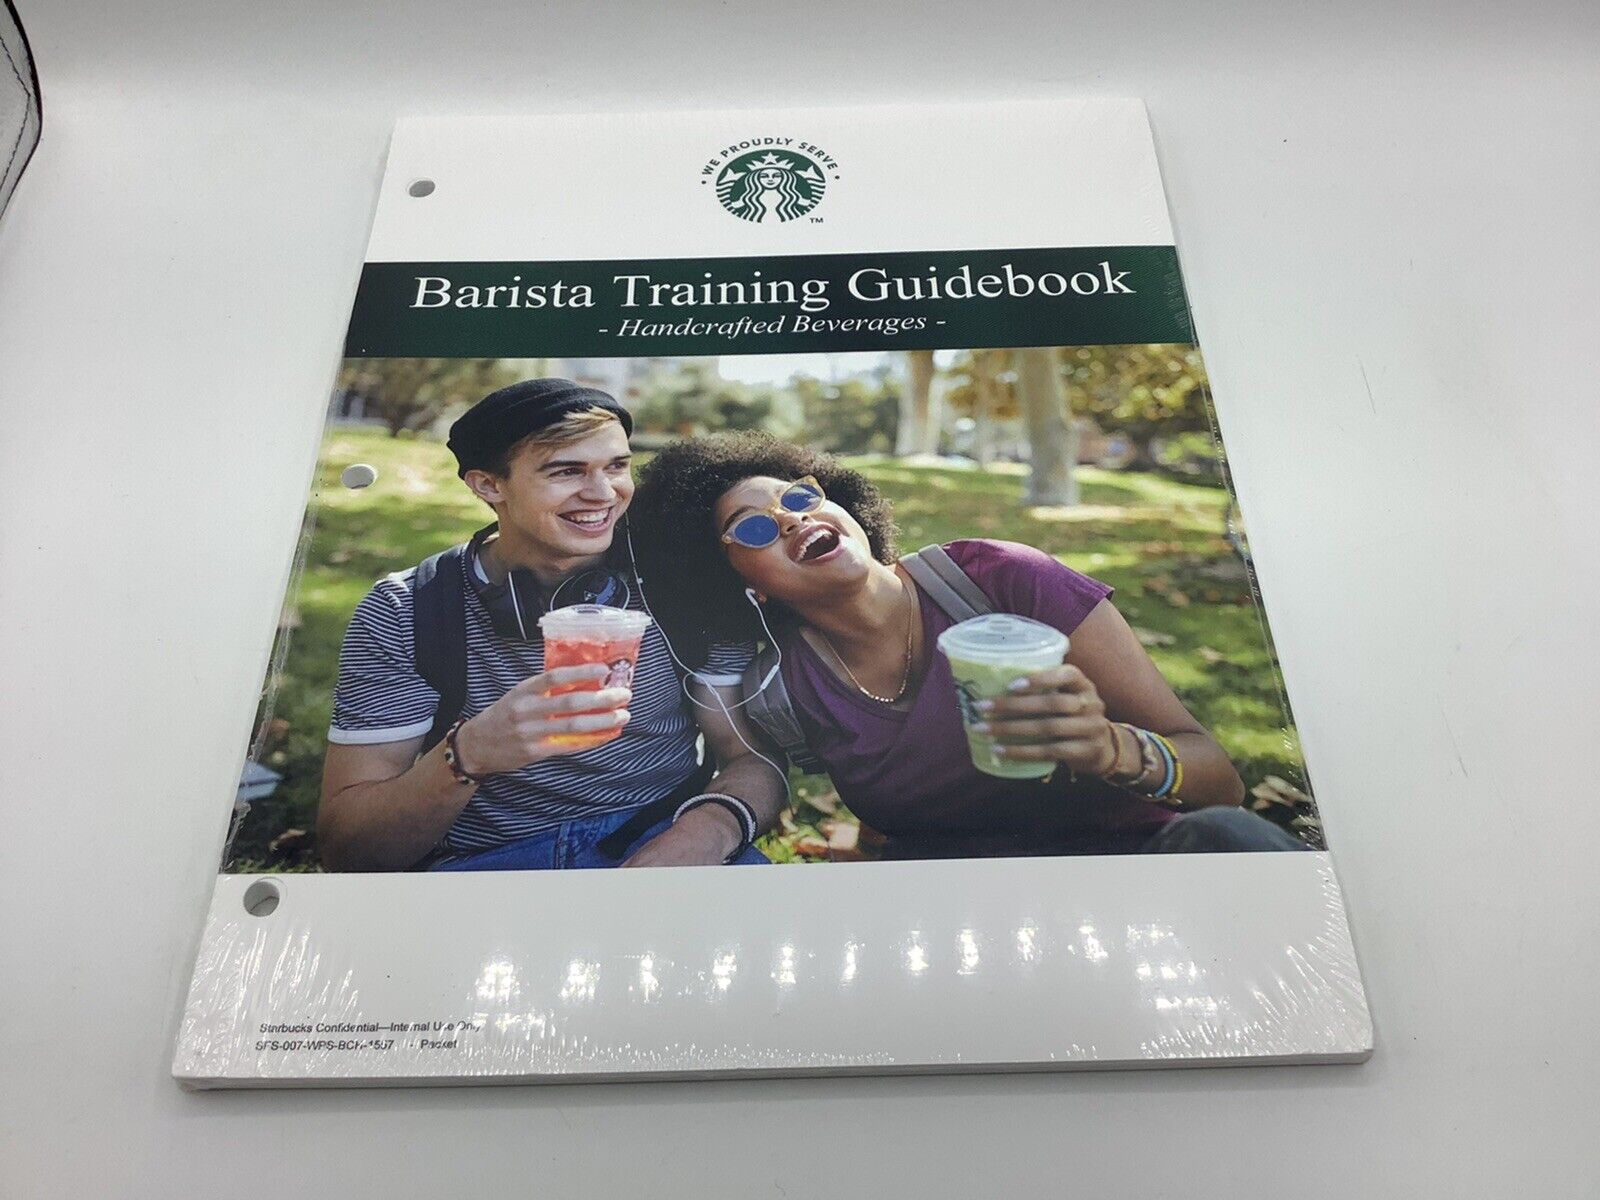 Starbucks Barista Training Guidebook. New & Sealed